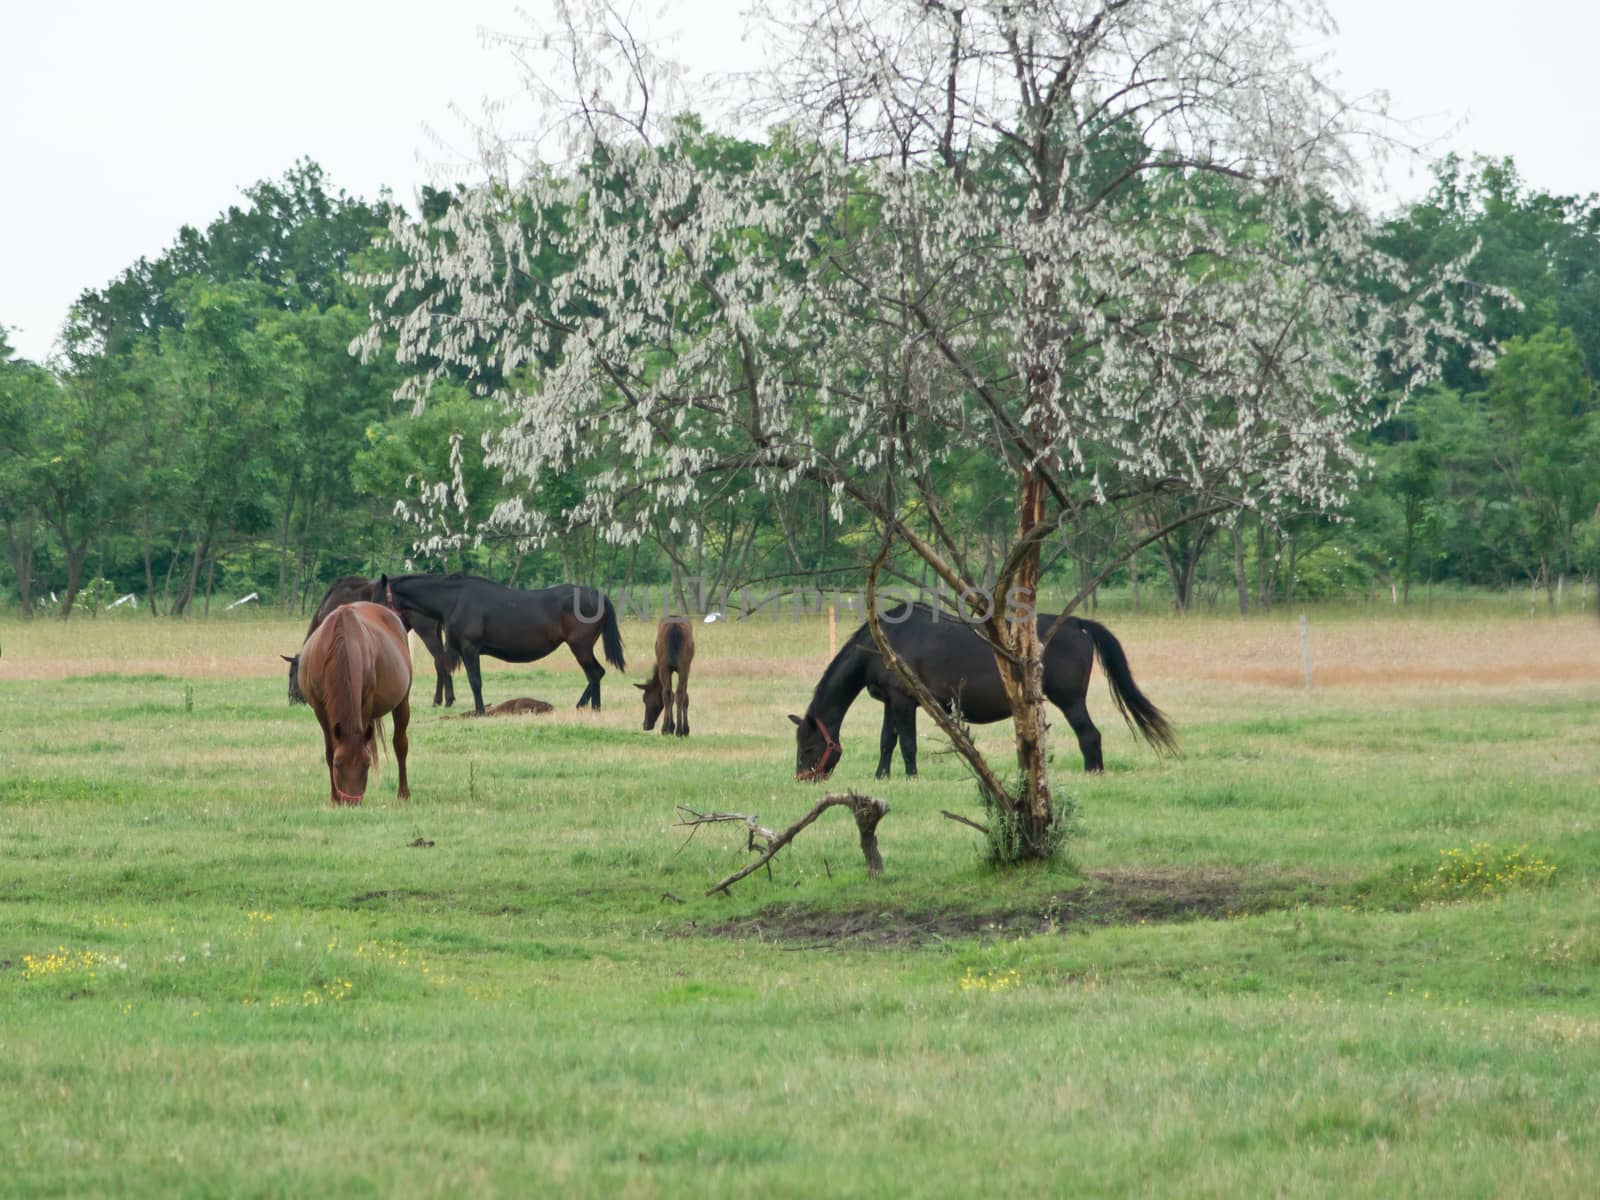 Horses graze in a pasture.